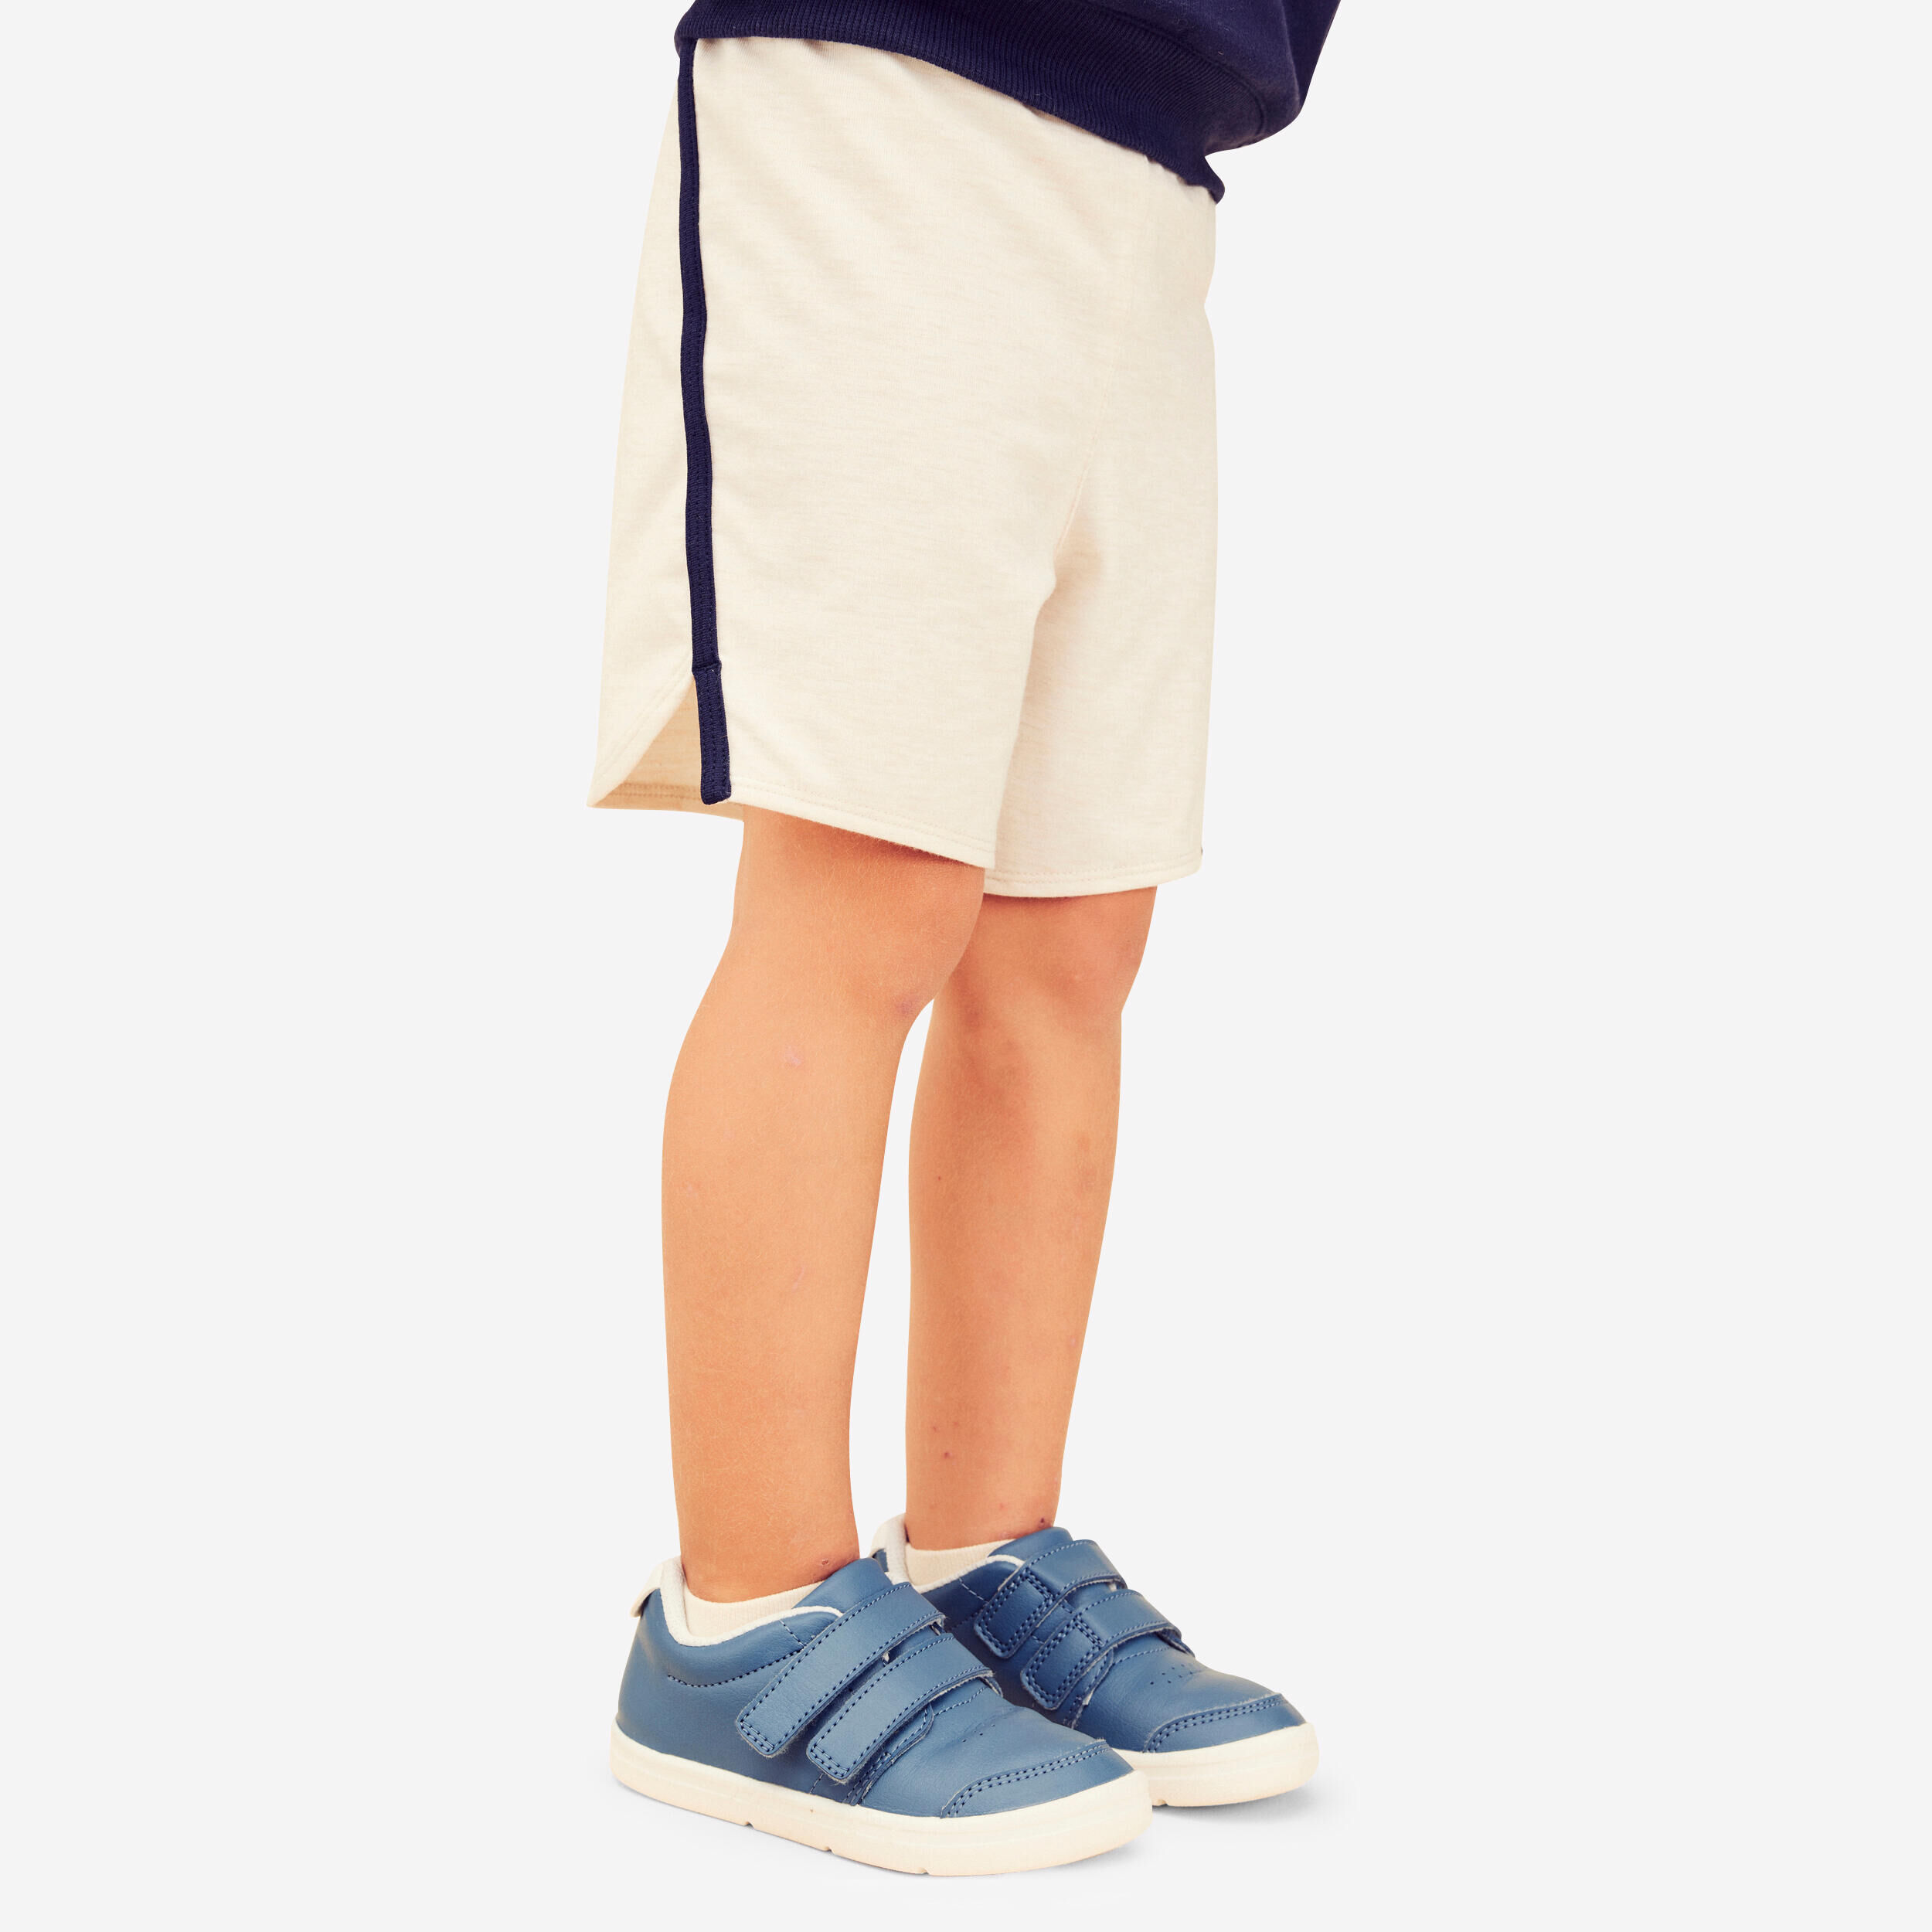 DOMYOS Kids' Breathable Adjustable Shorts